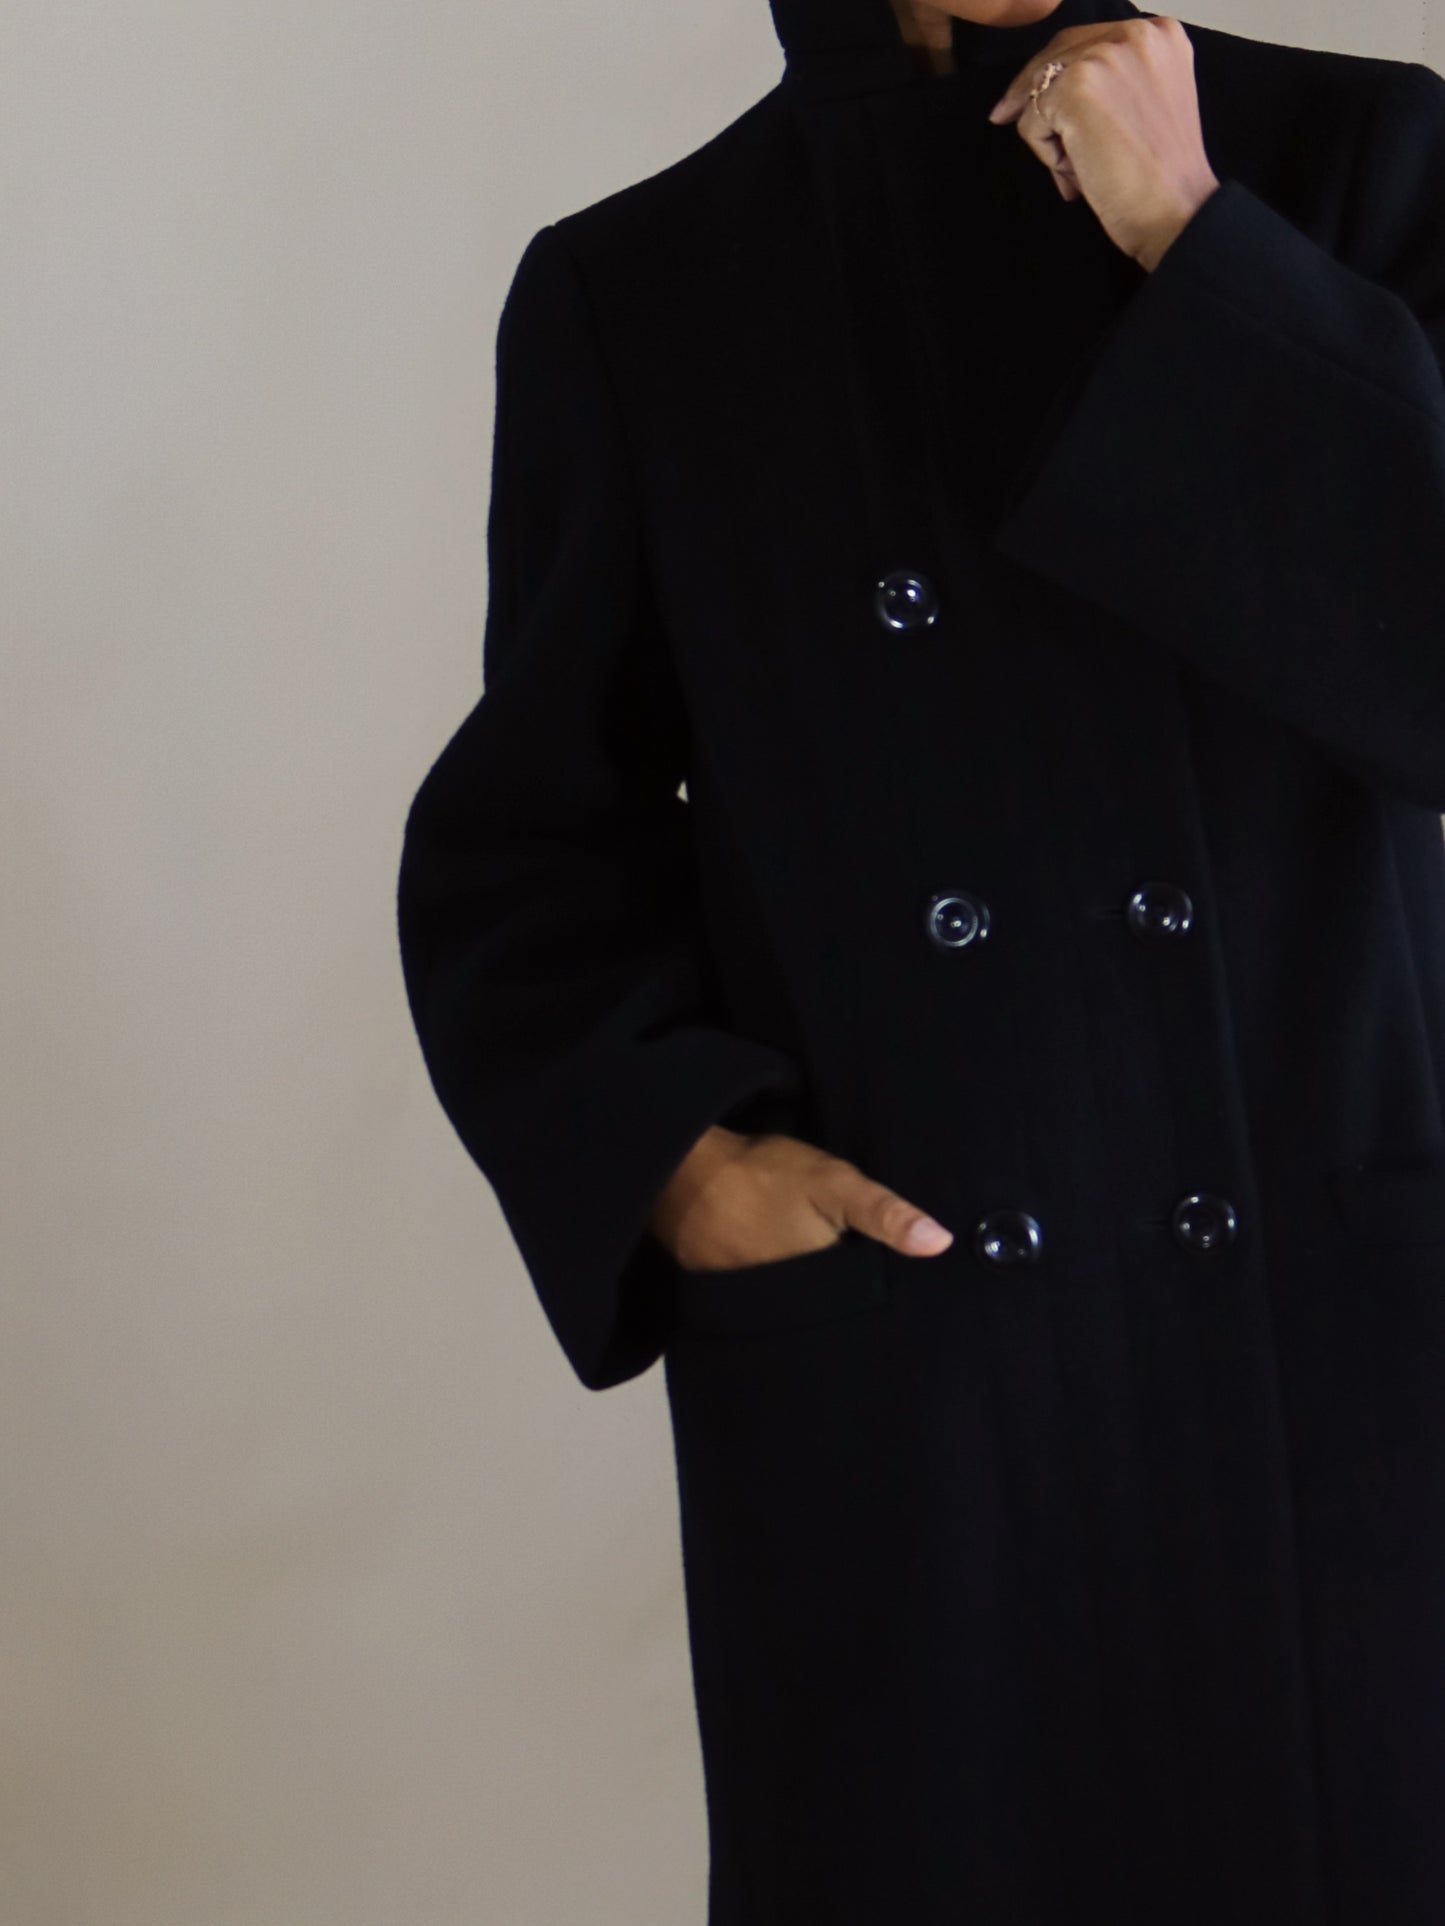 a trigere coat, black wool